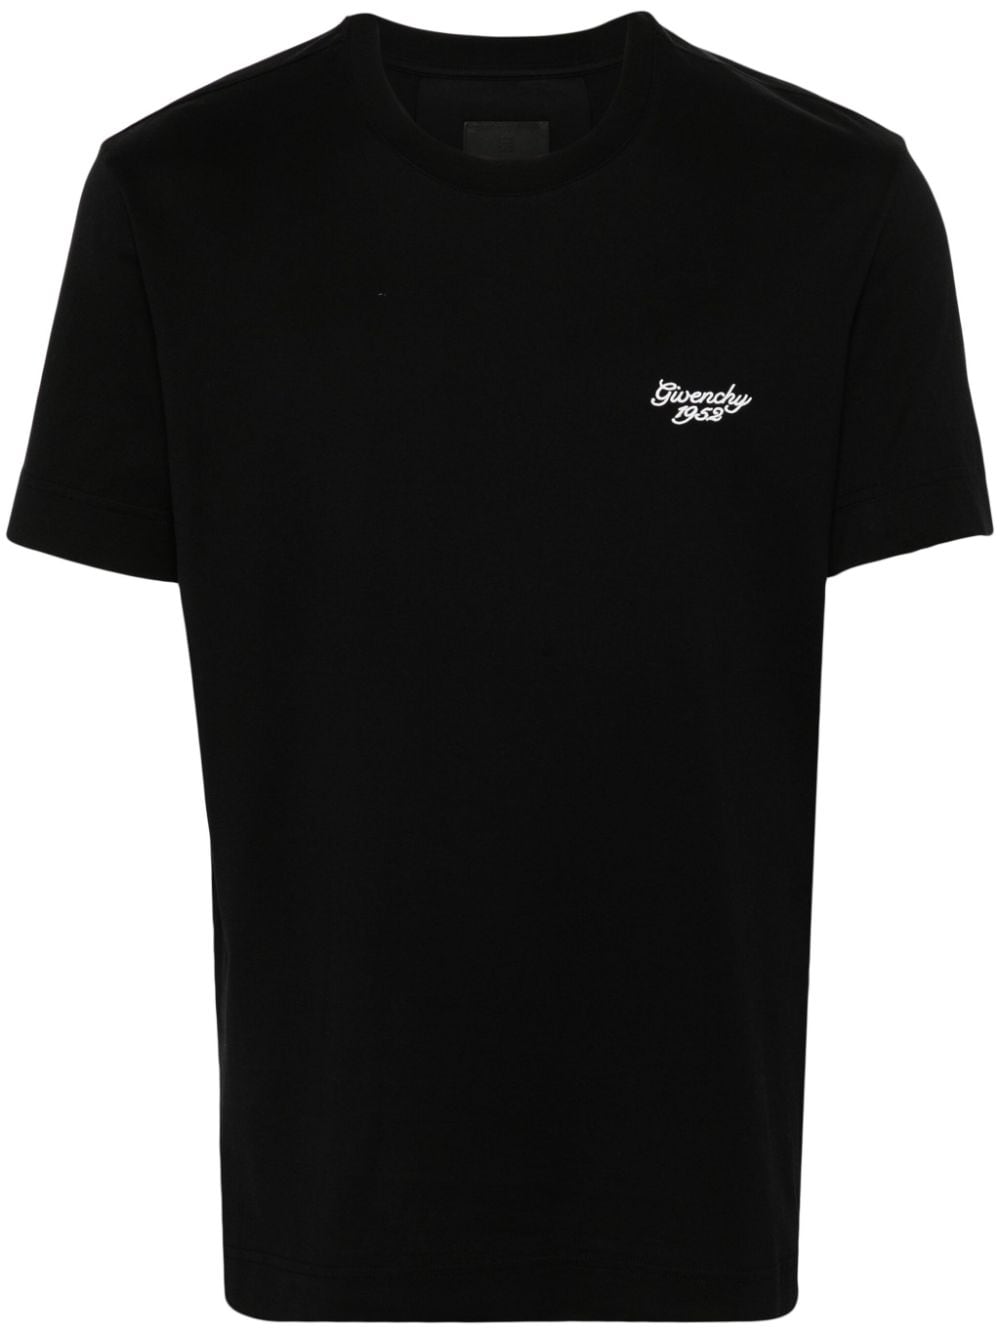 T-shirt nera con logo frontale